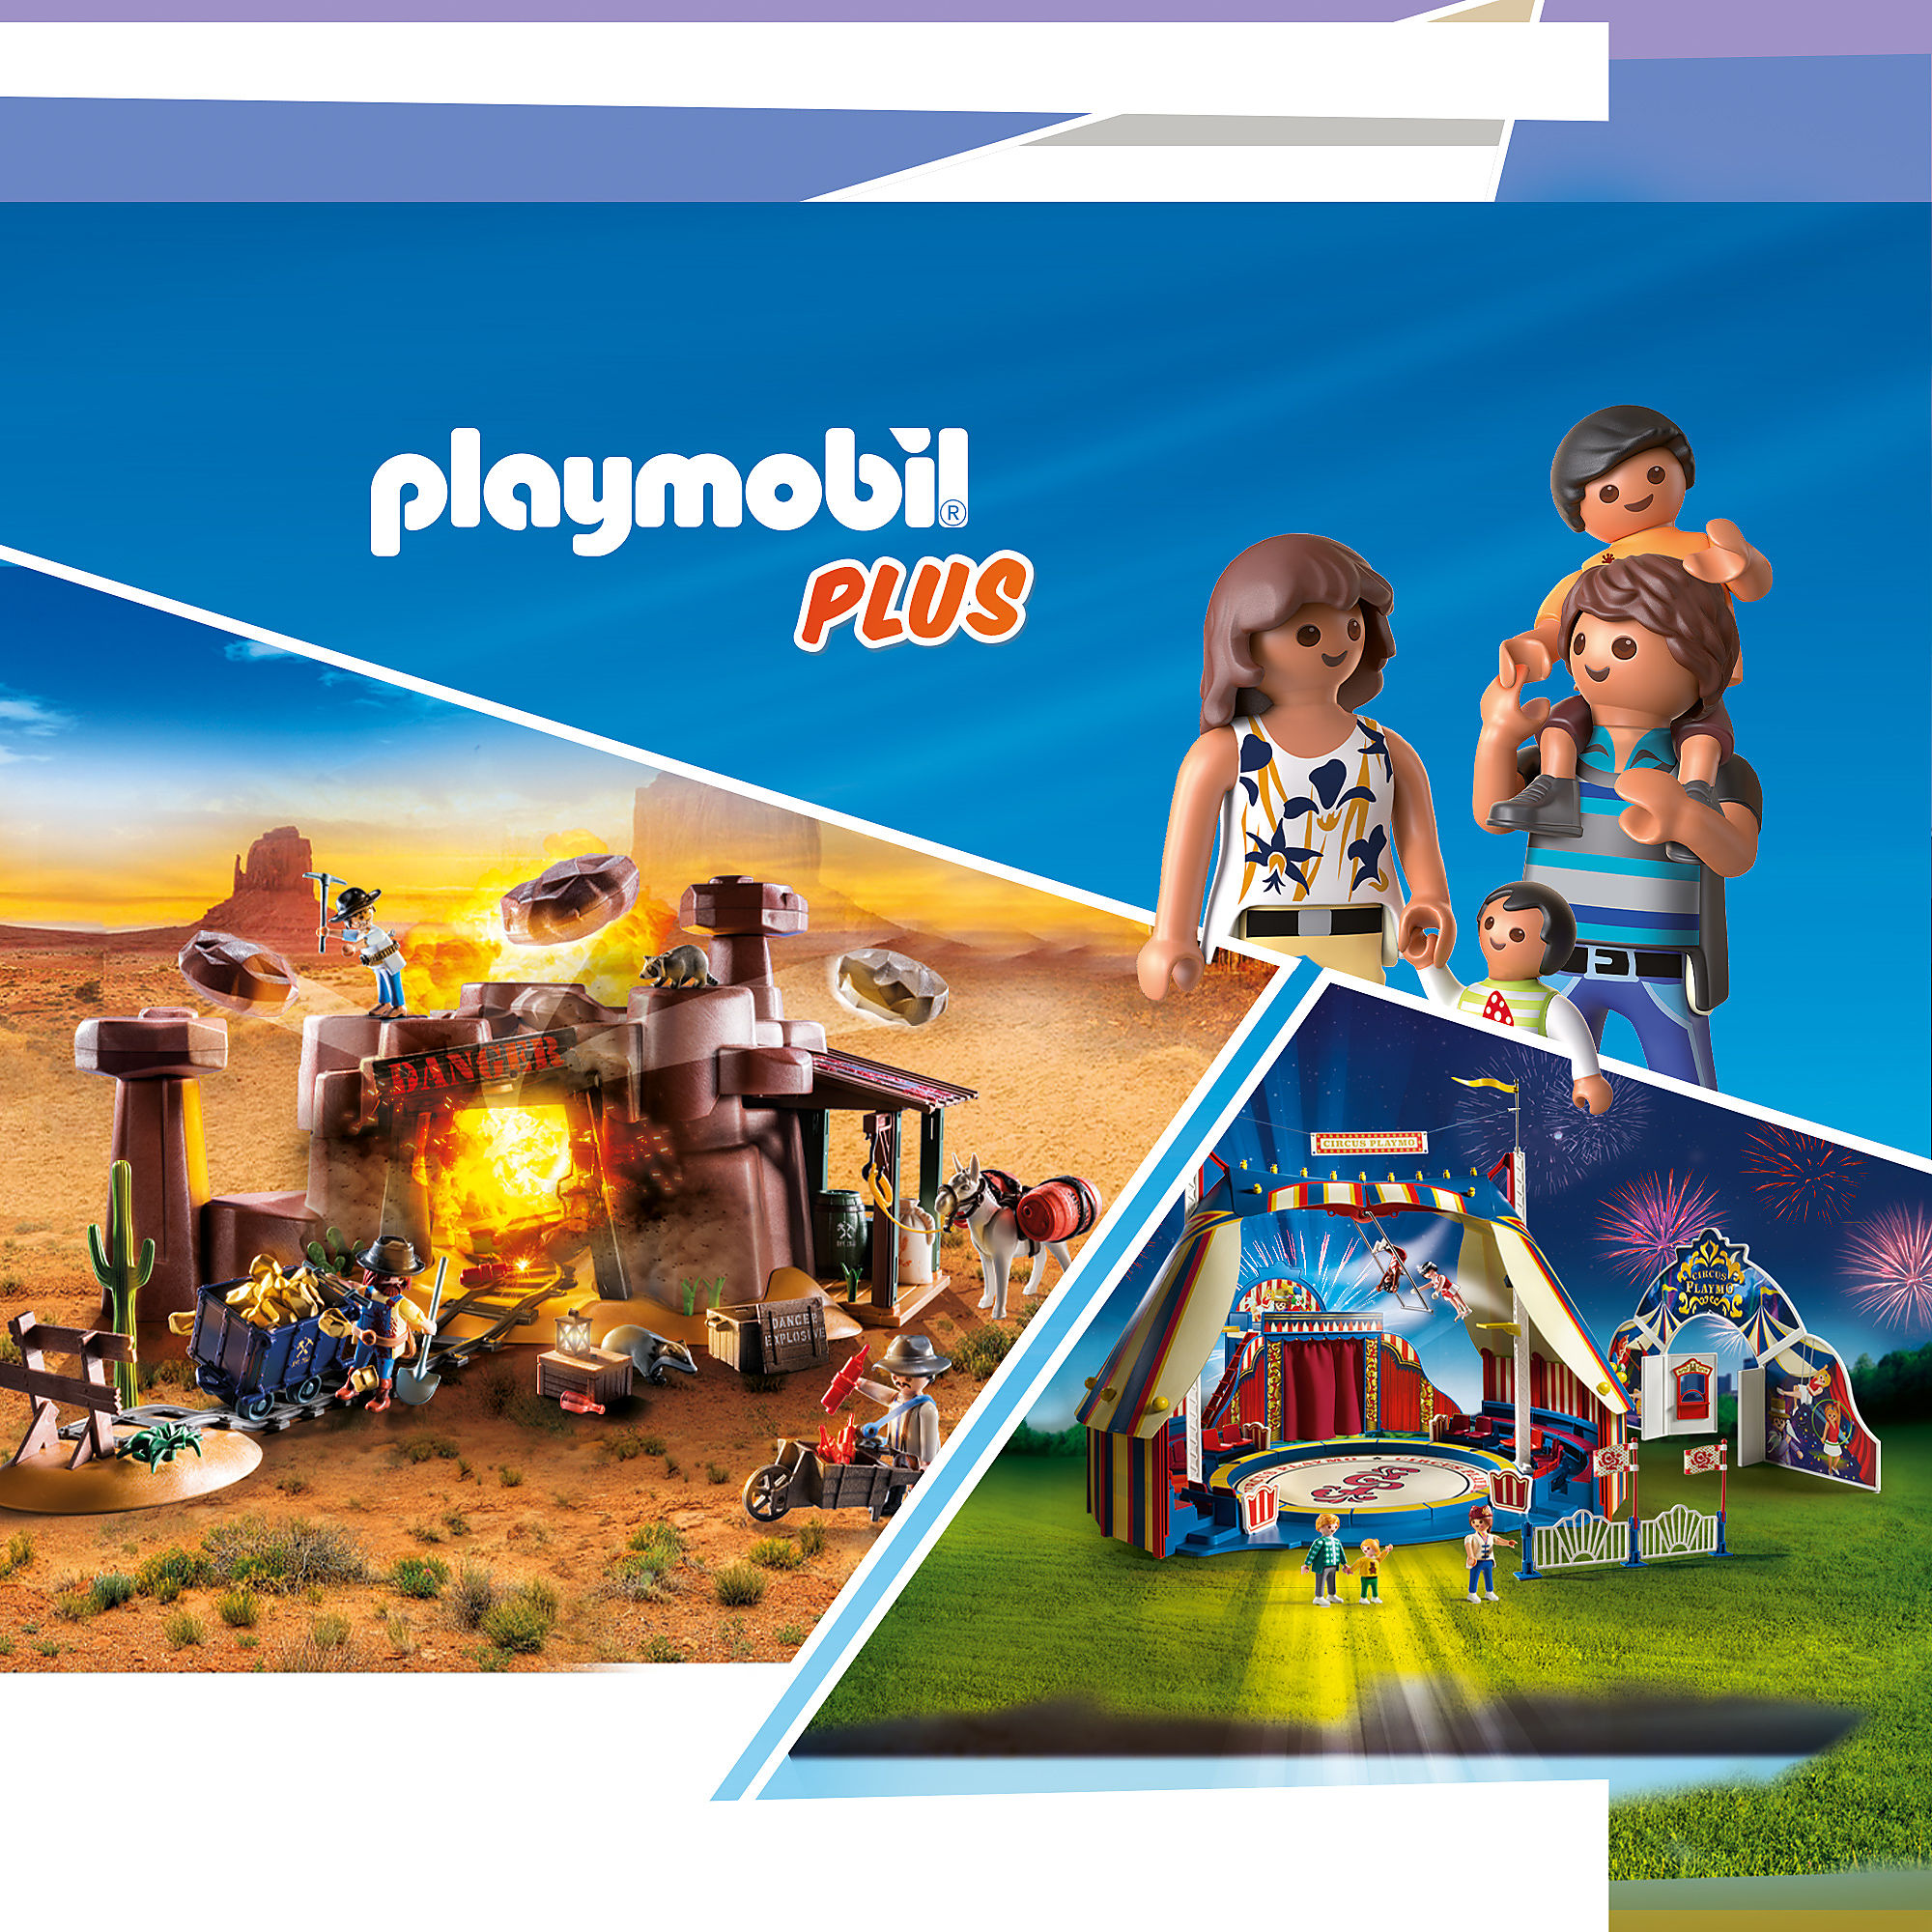 Playmobil Family Fun: Country Singer Gift Set 71184 – Growing Tree Toys